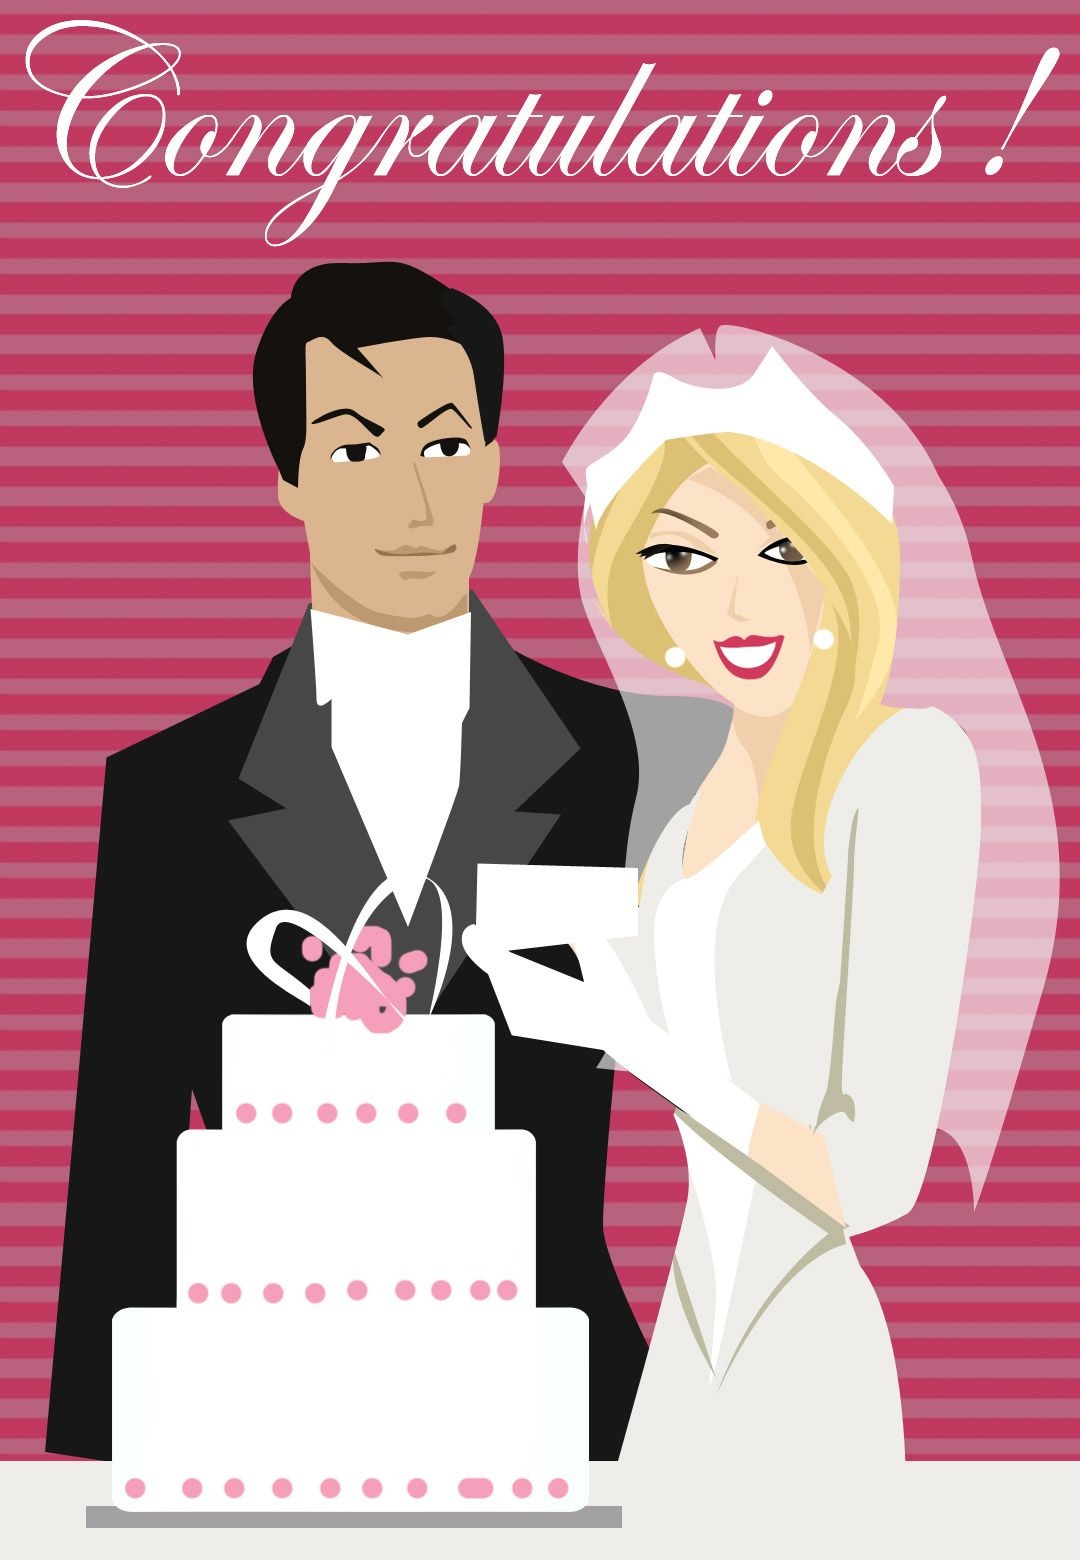 Free Printable Congratulations Greeting Card | Wedding Cards To - Free Printable Wedding Congratulations Greeting Cards